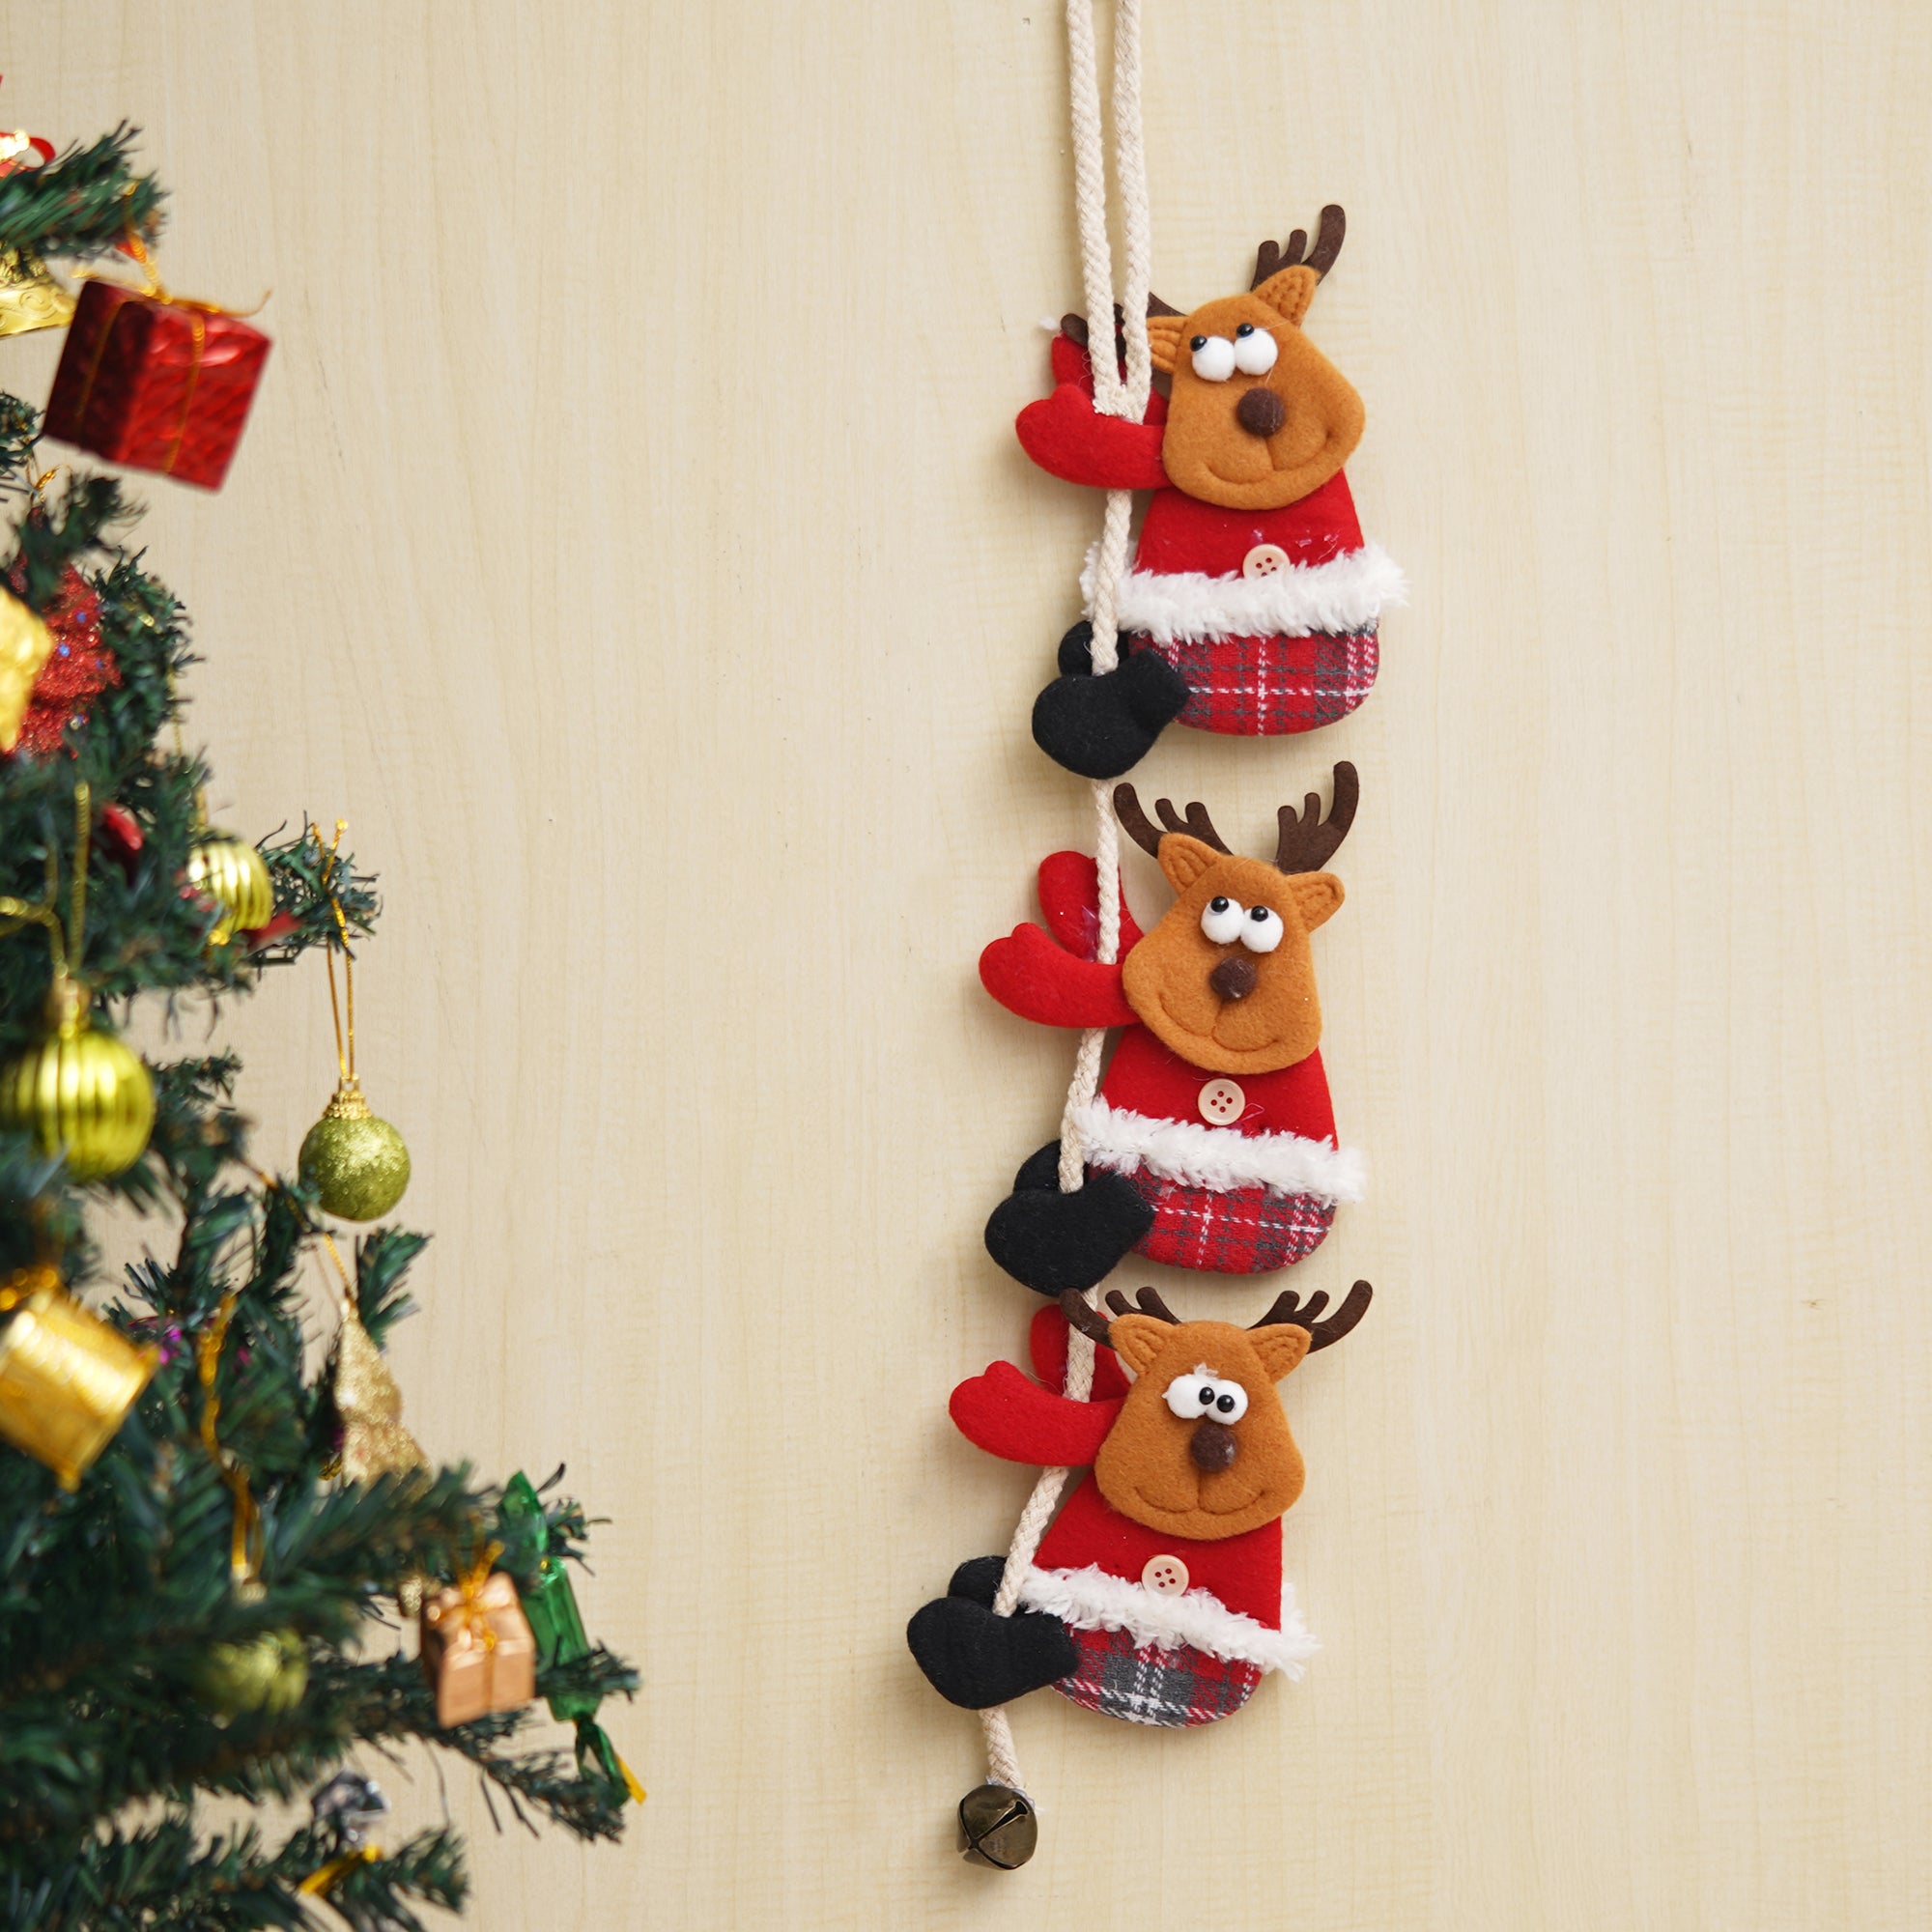 eCraftIndia Merry Christmas Ornaments Santa Claus Snowman Hanging Decoration